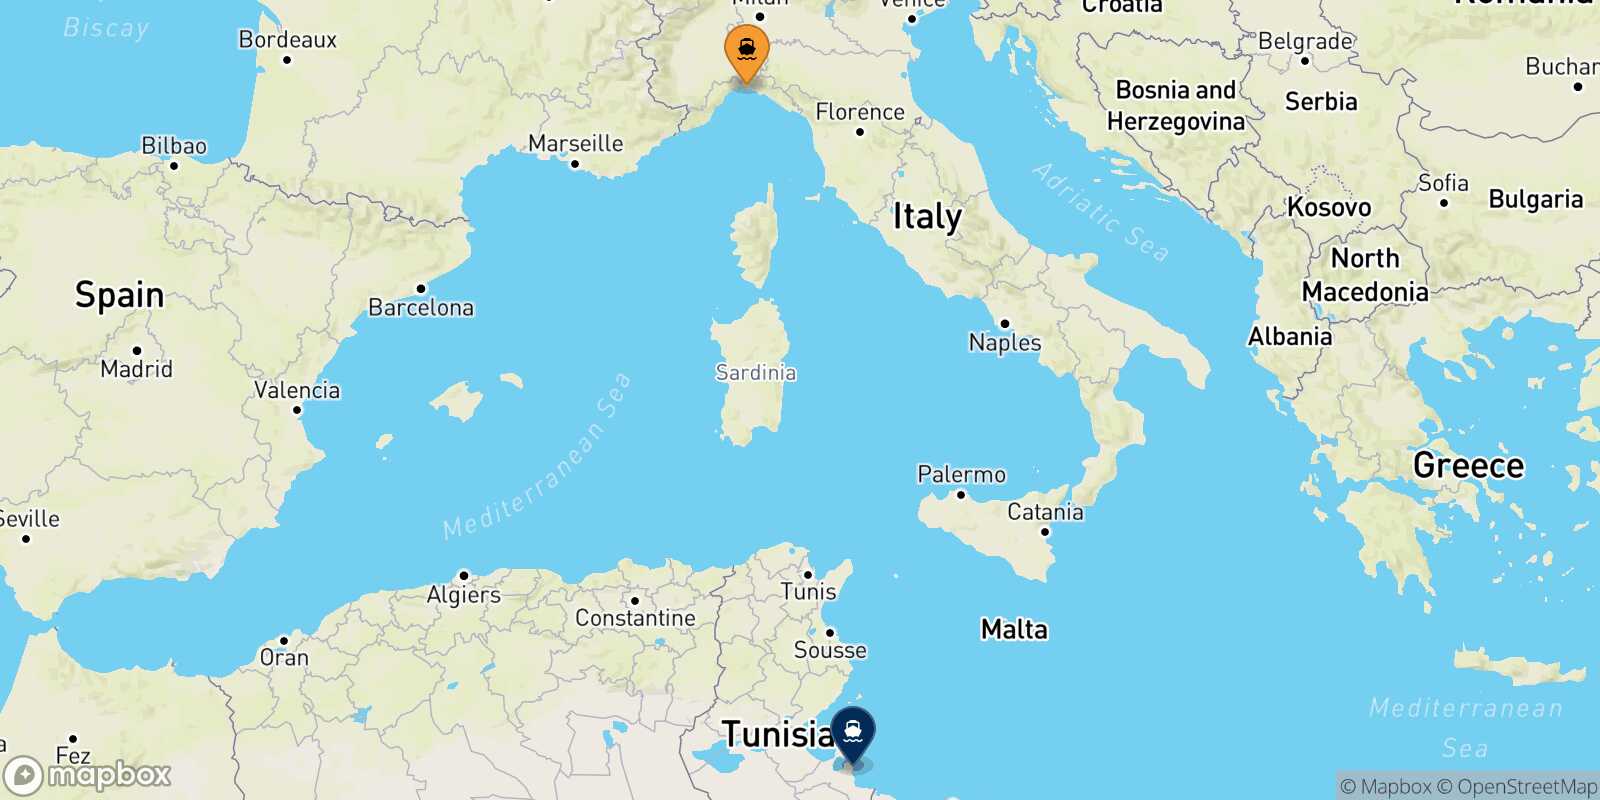 Genoa Zarzis route map